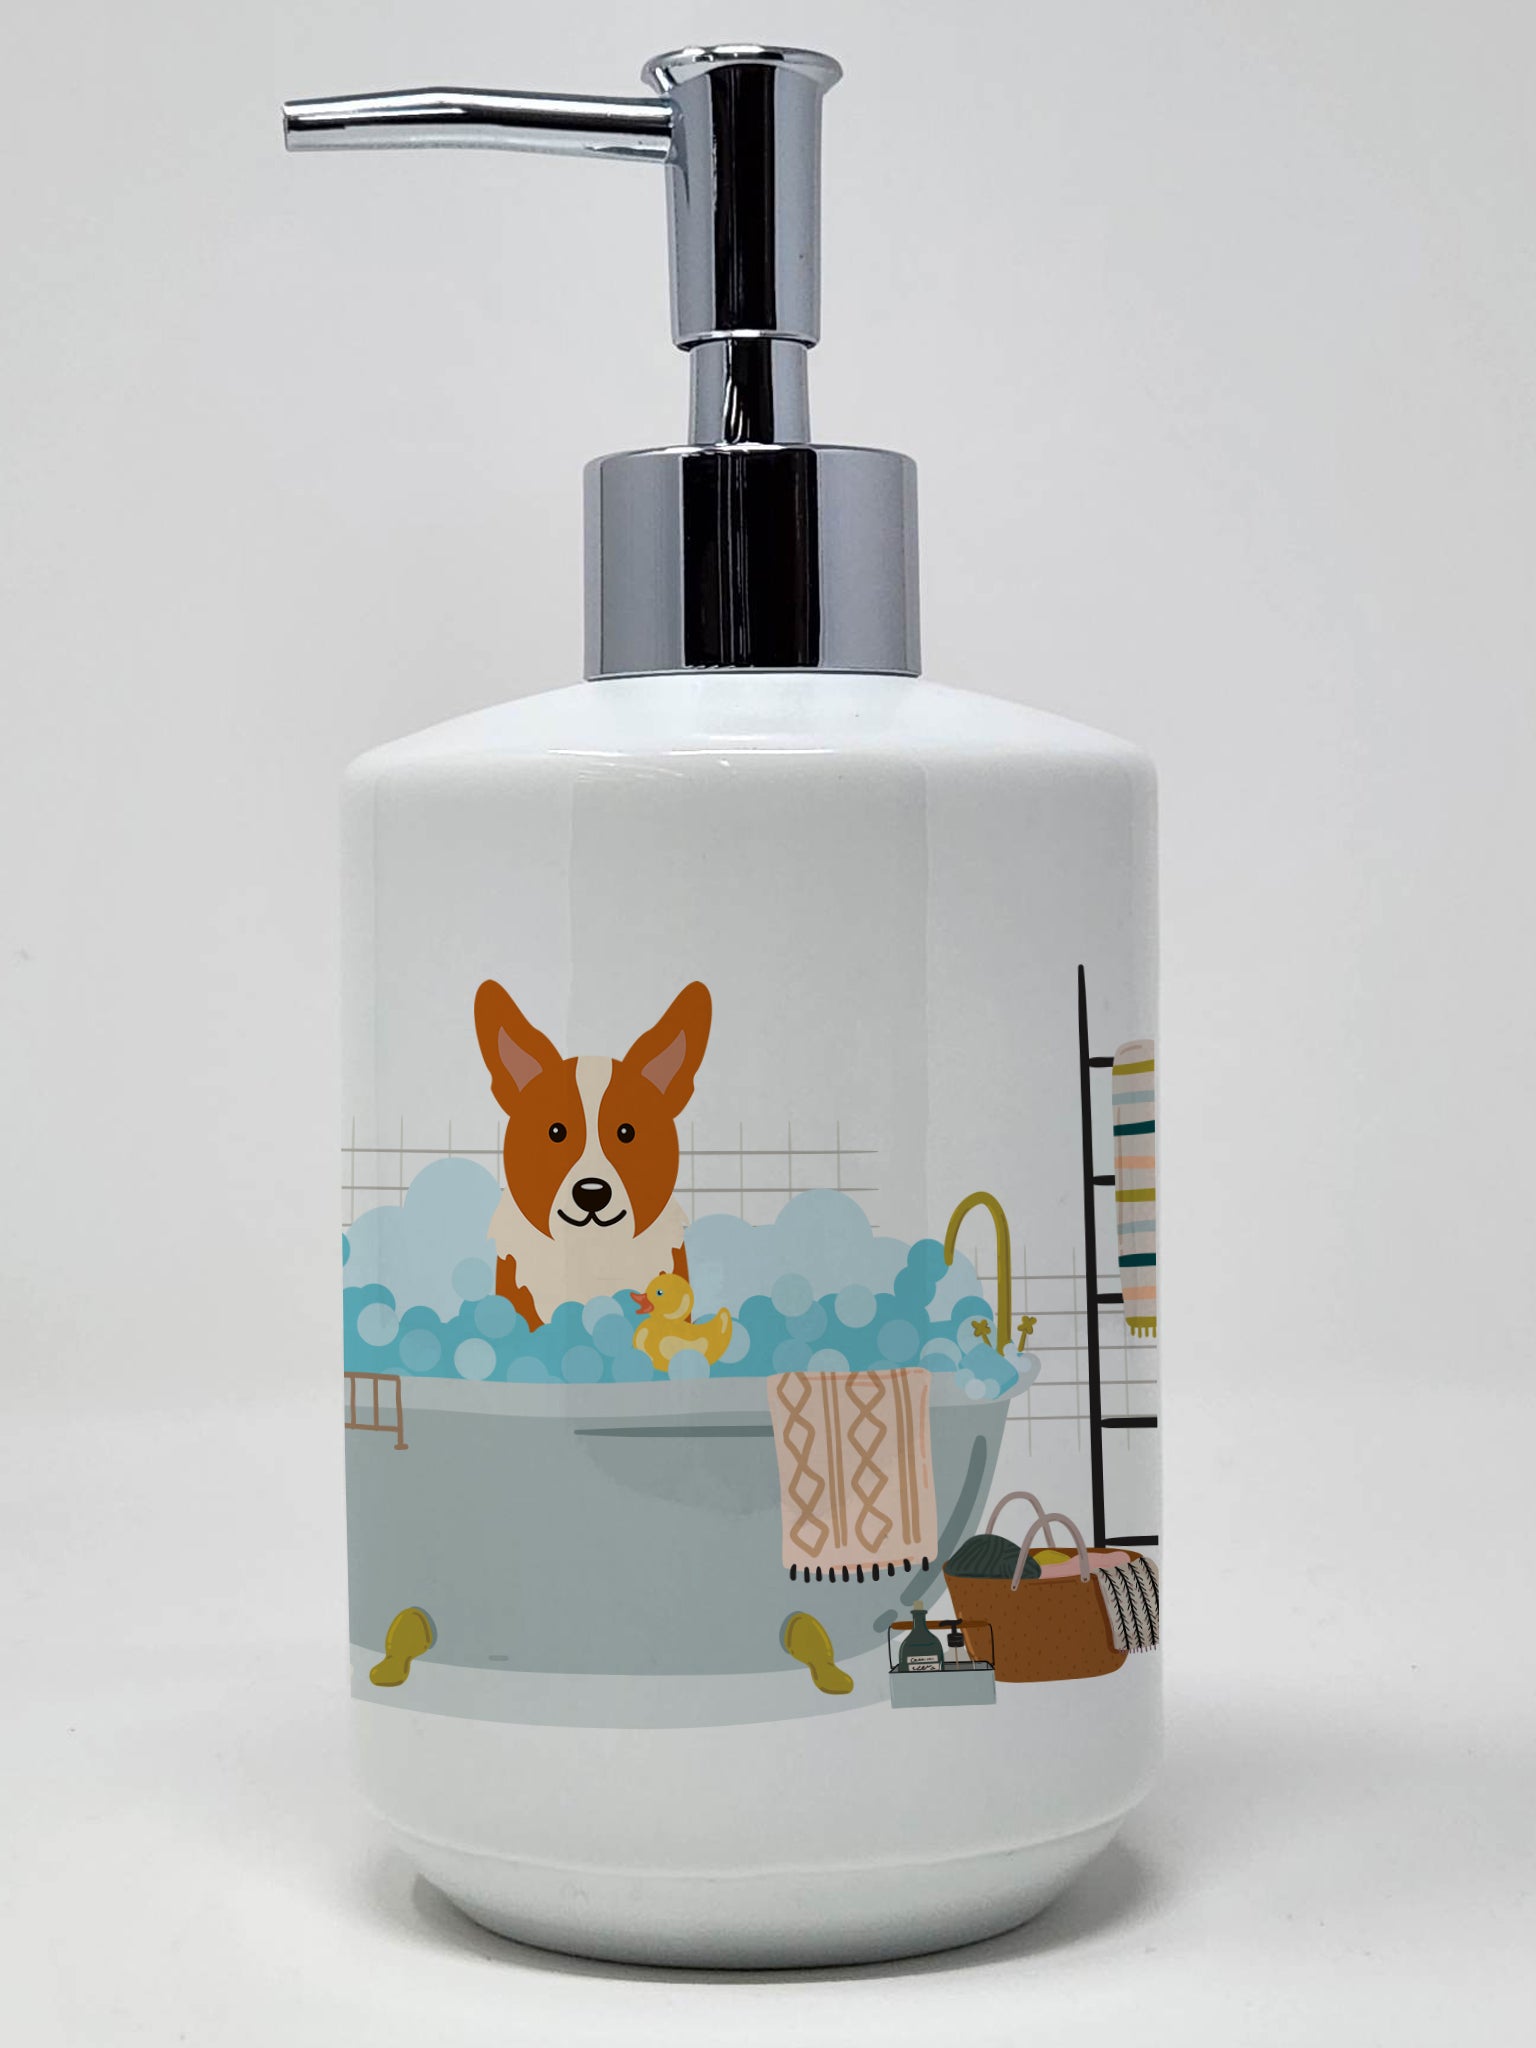 Buy this Corgi in Bathtub Ceramic Soap Dispenser